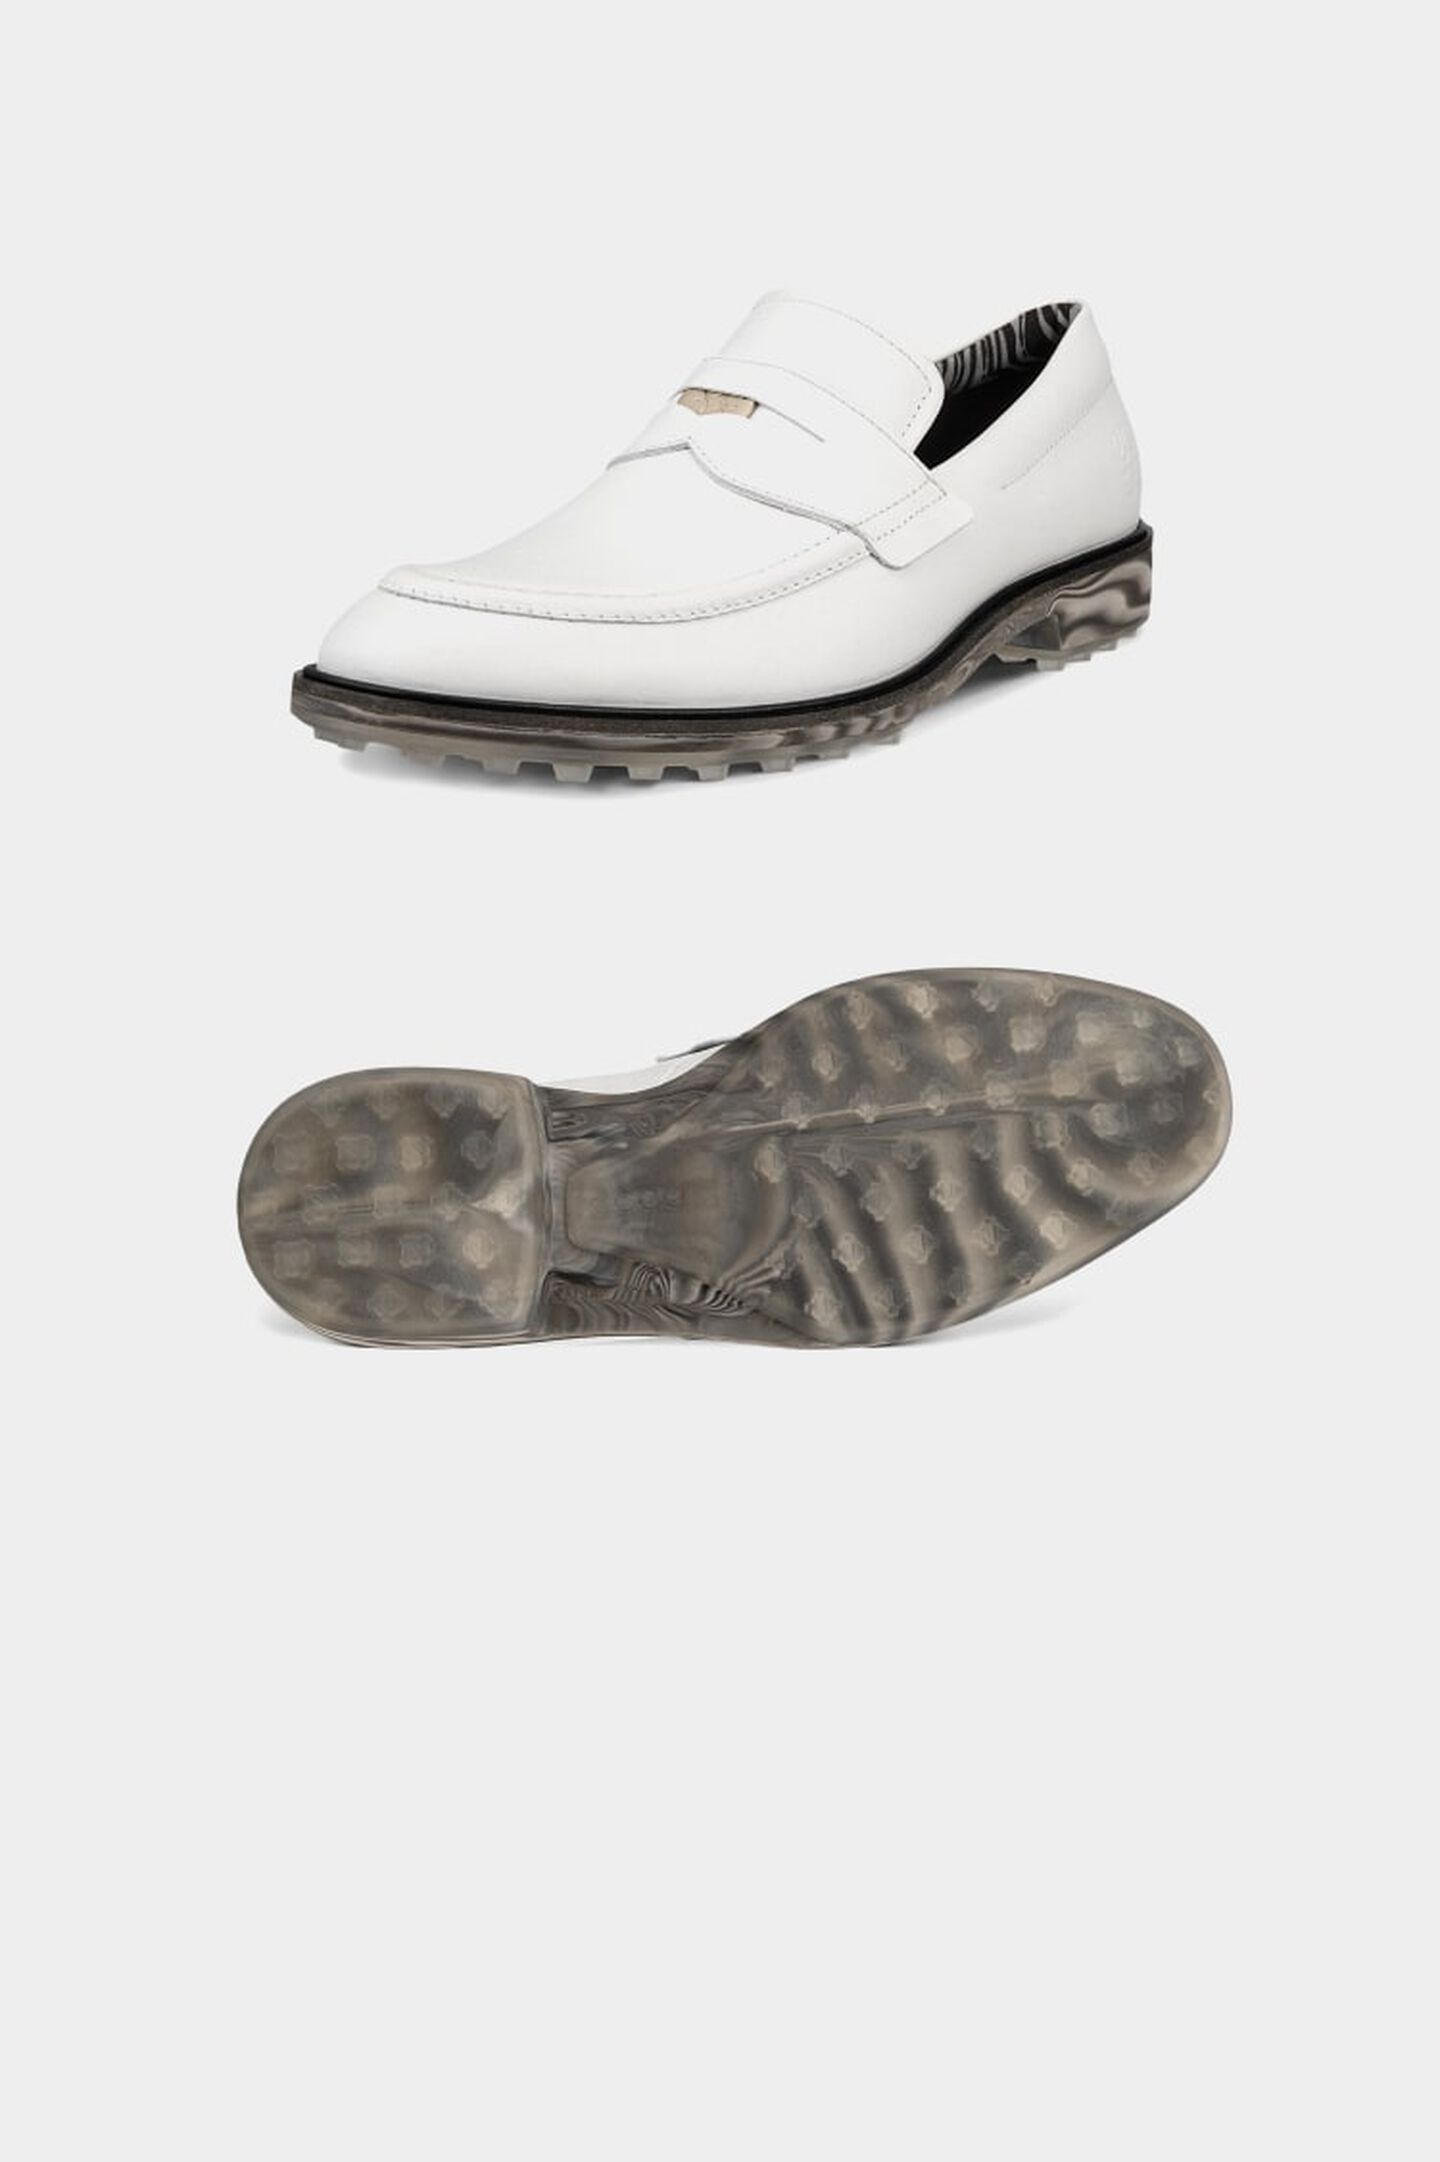 Men's golf shoe